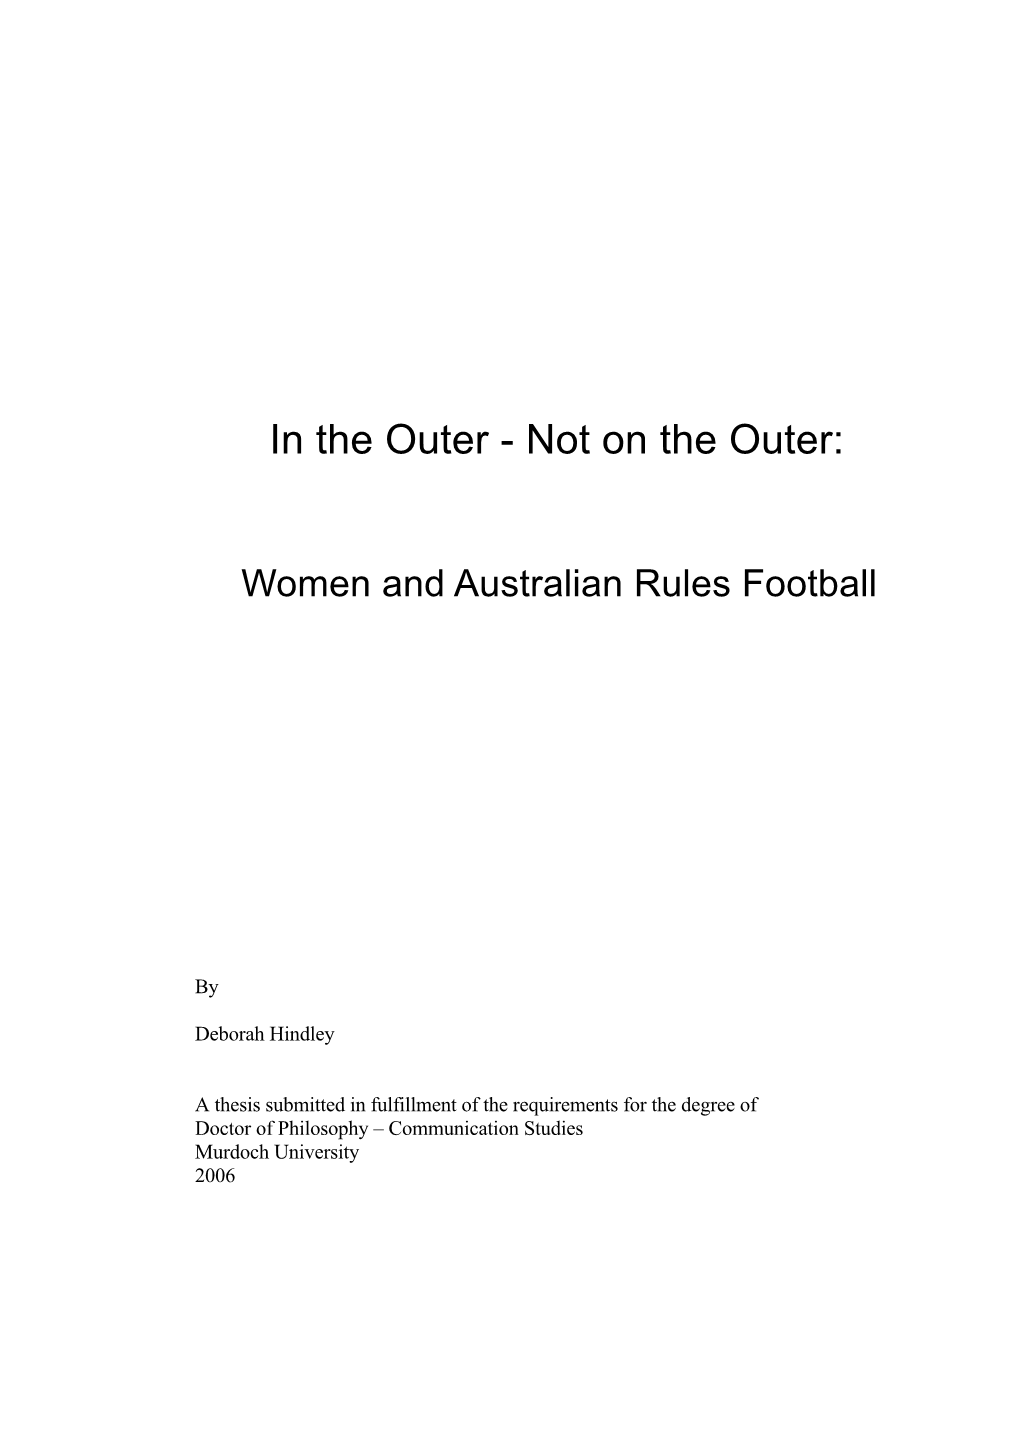 Australian Rules Football